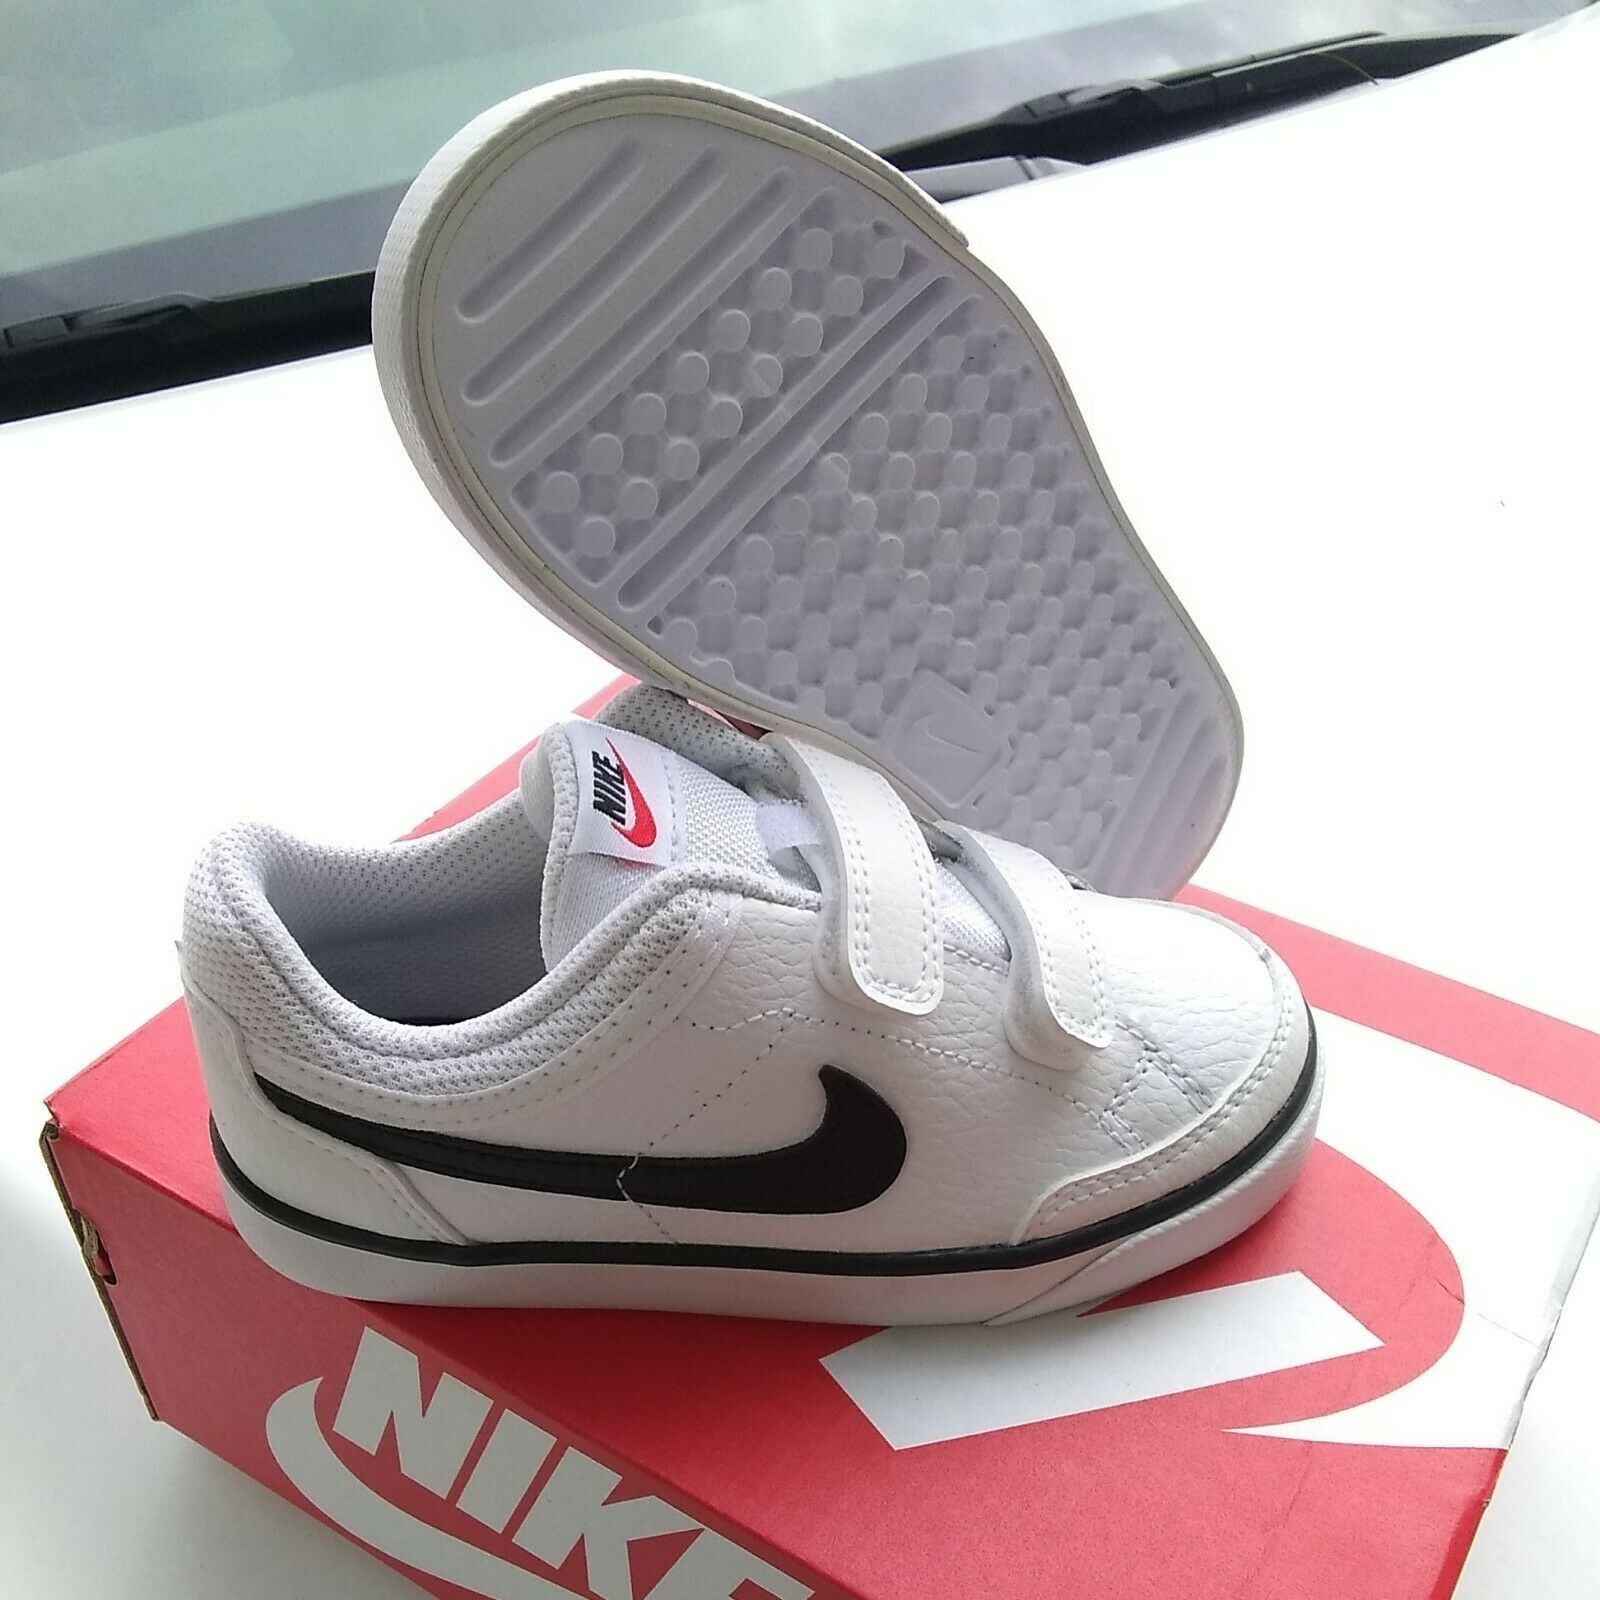 niveau Nu al Beschrijving Nike capri 3 leather shoes Toddler size 6c and 50 similar items